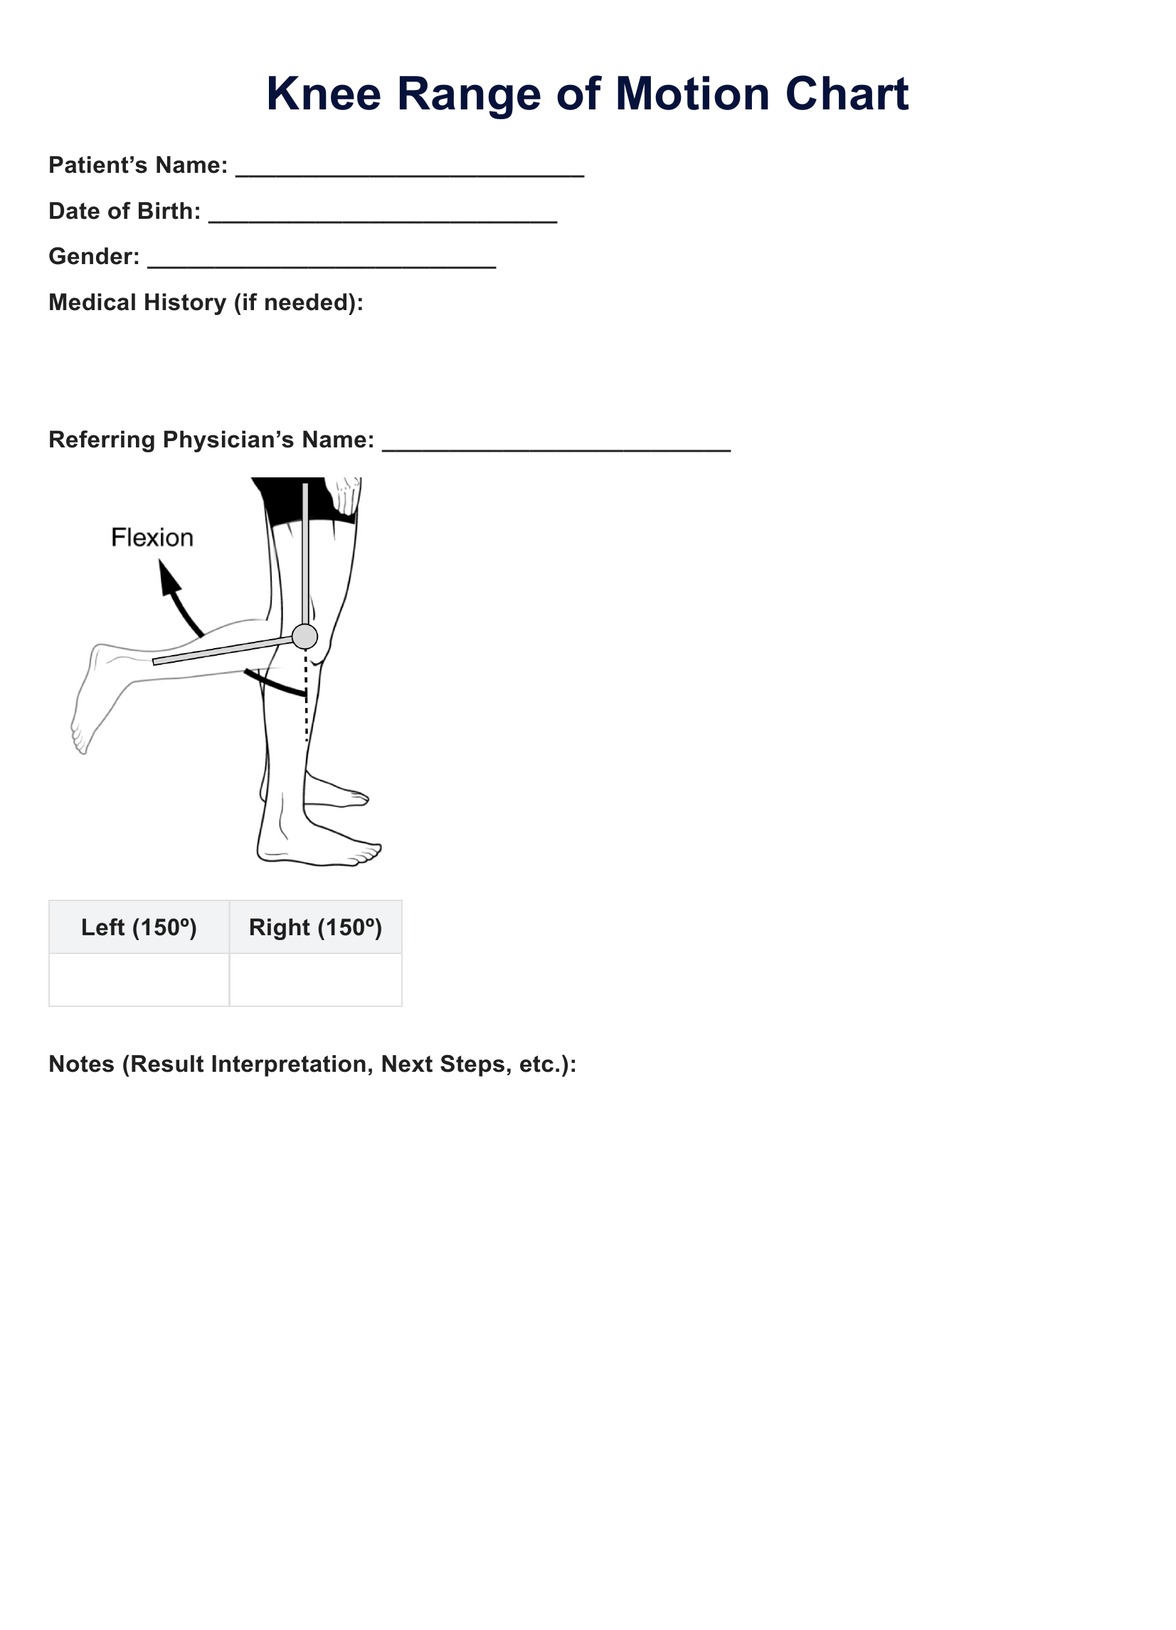 Knee Range of Motion Chart PDF Example